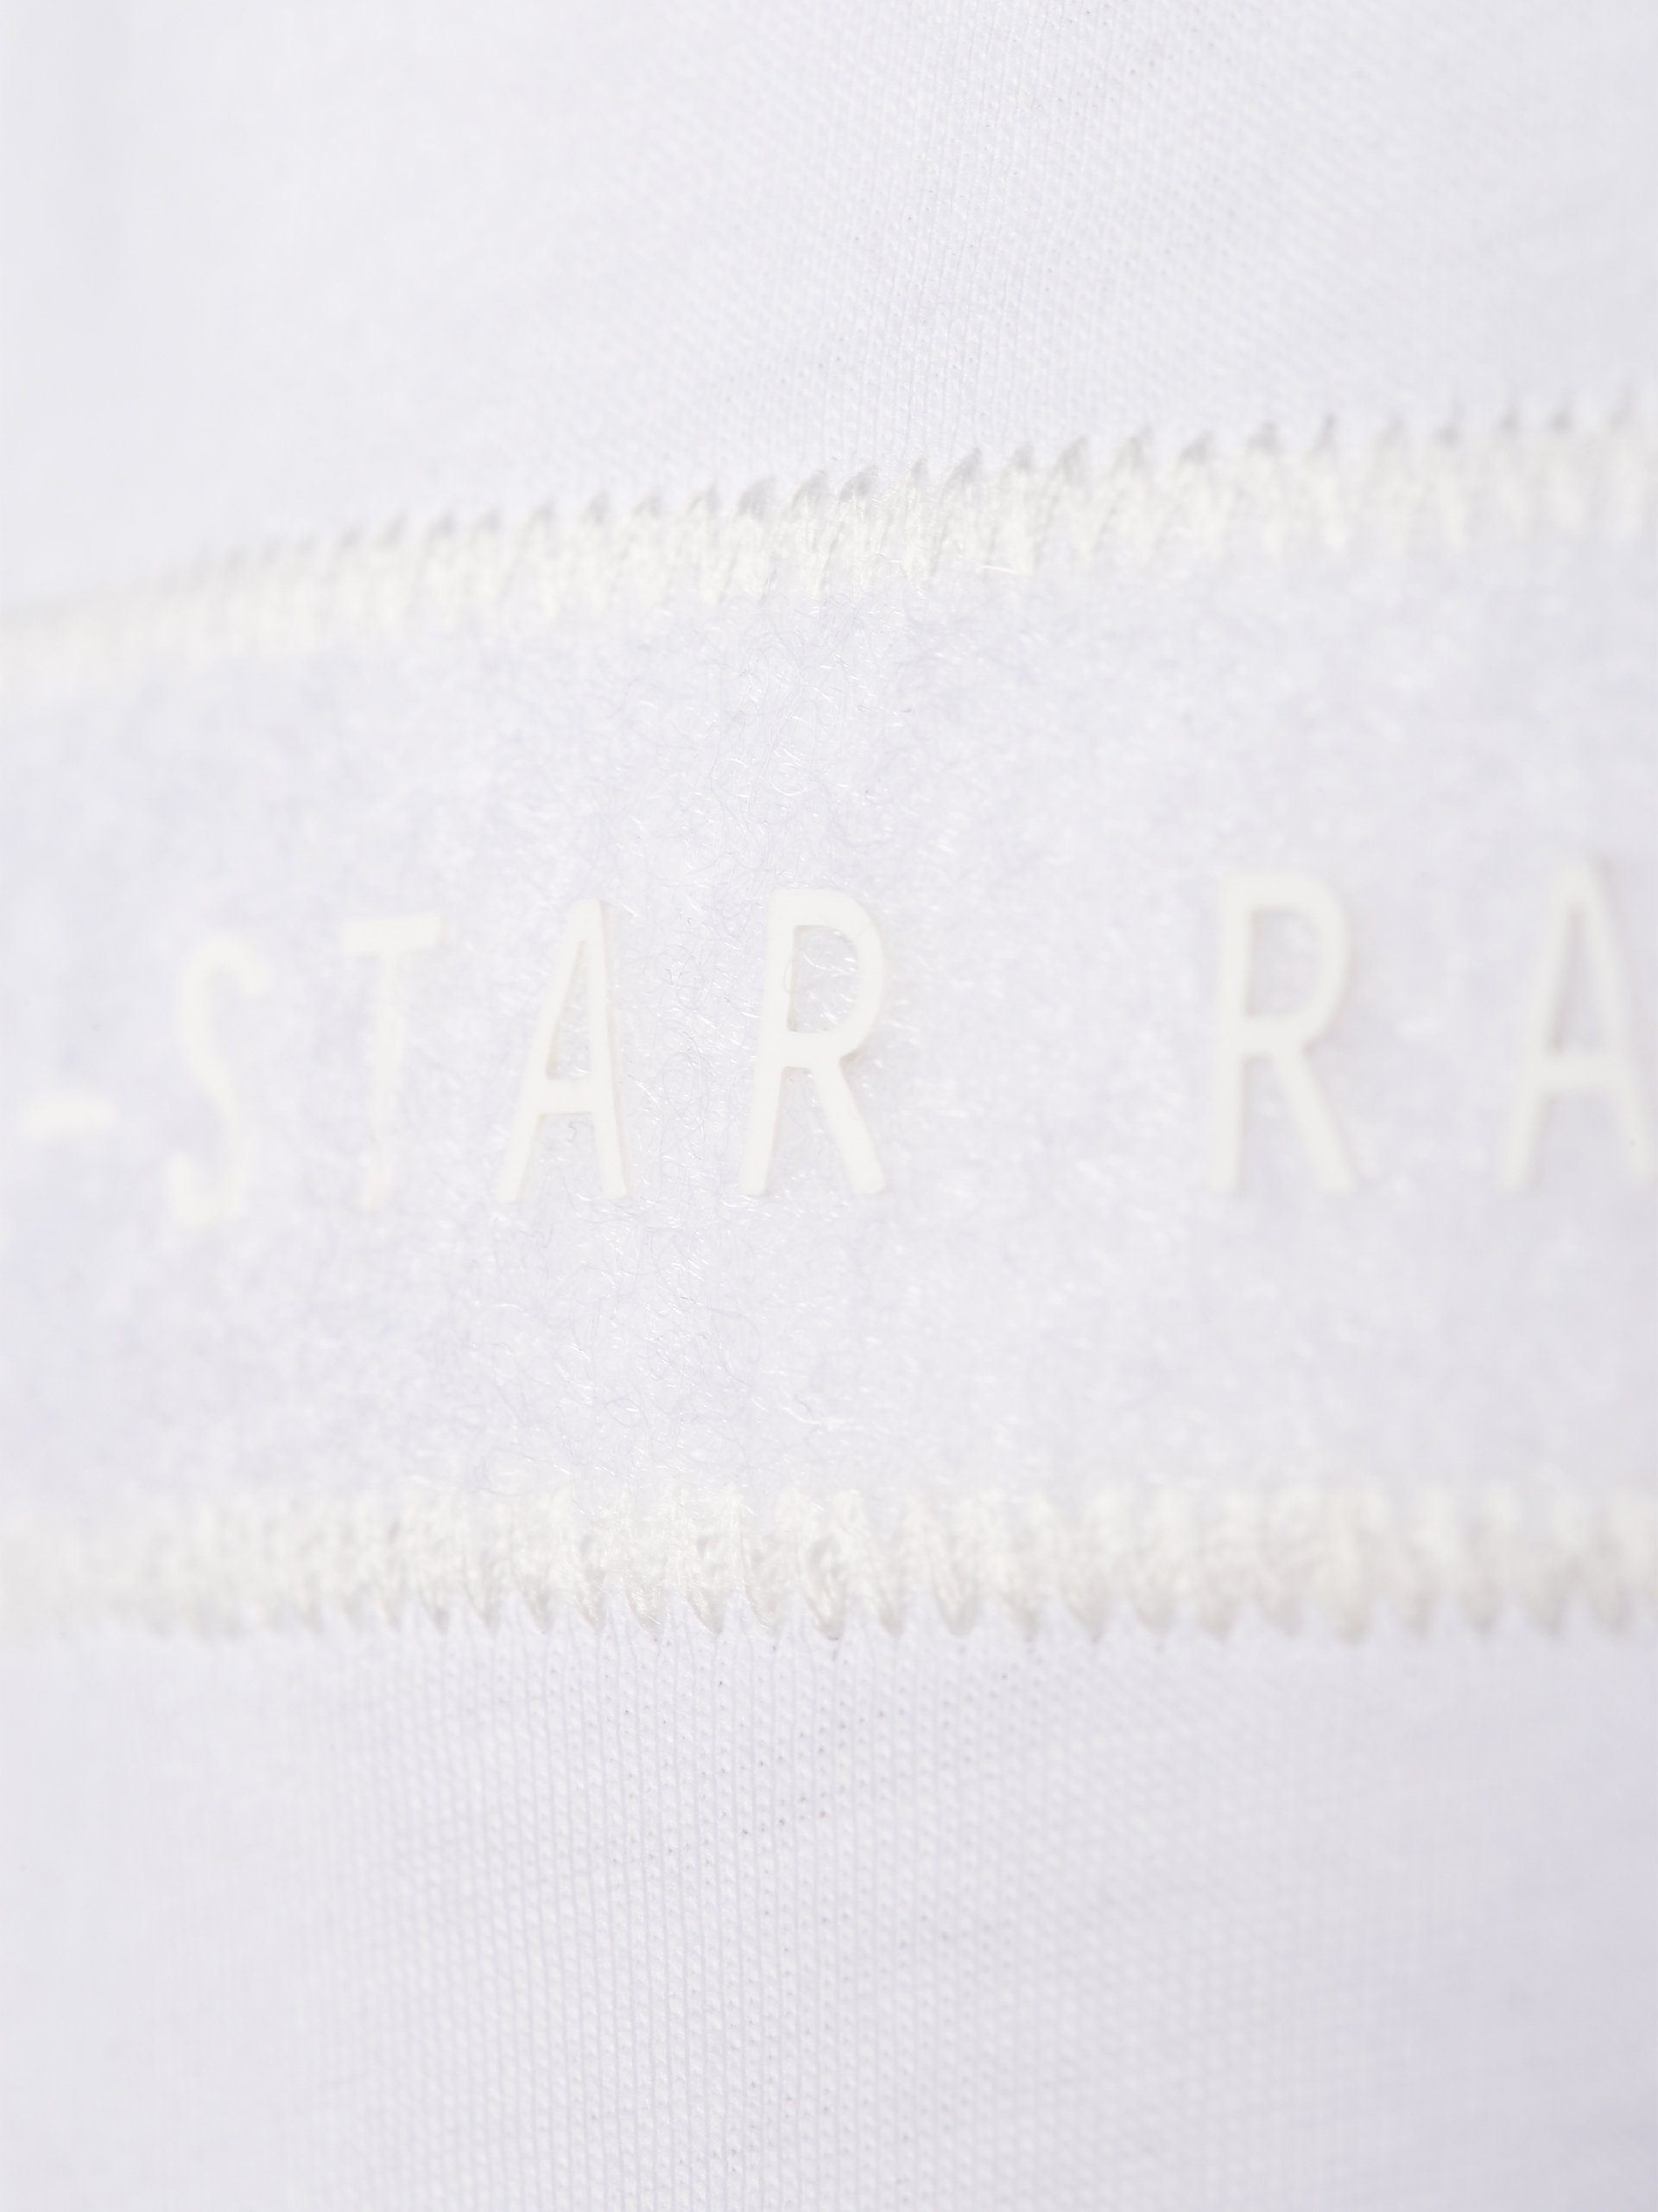 G-Star RAW T-Shirt weiß Velcro